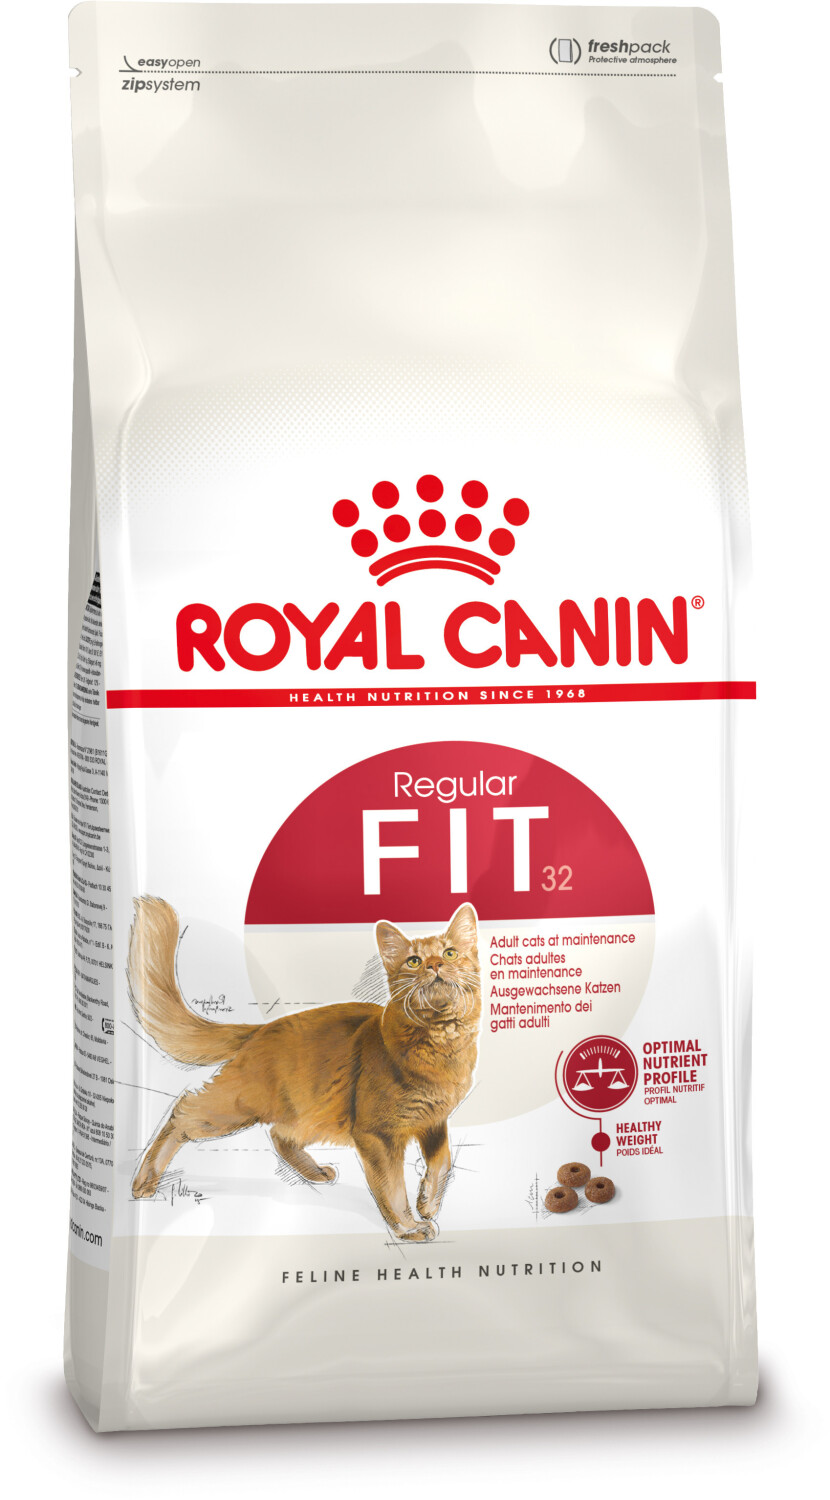 Royal Canin Fit 32 Regular 2kg ab 12,30 € | Preisvergleich bei idealo.de